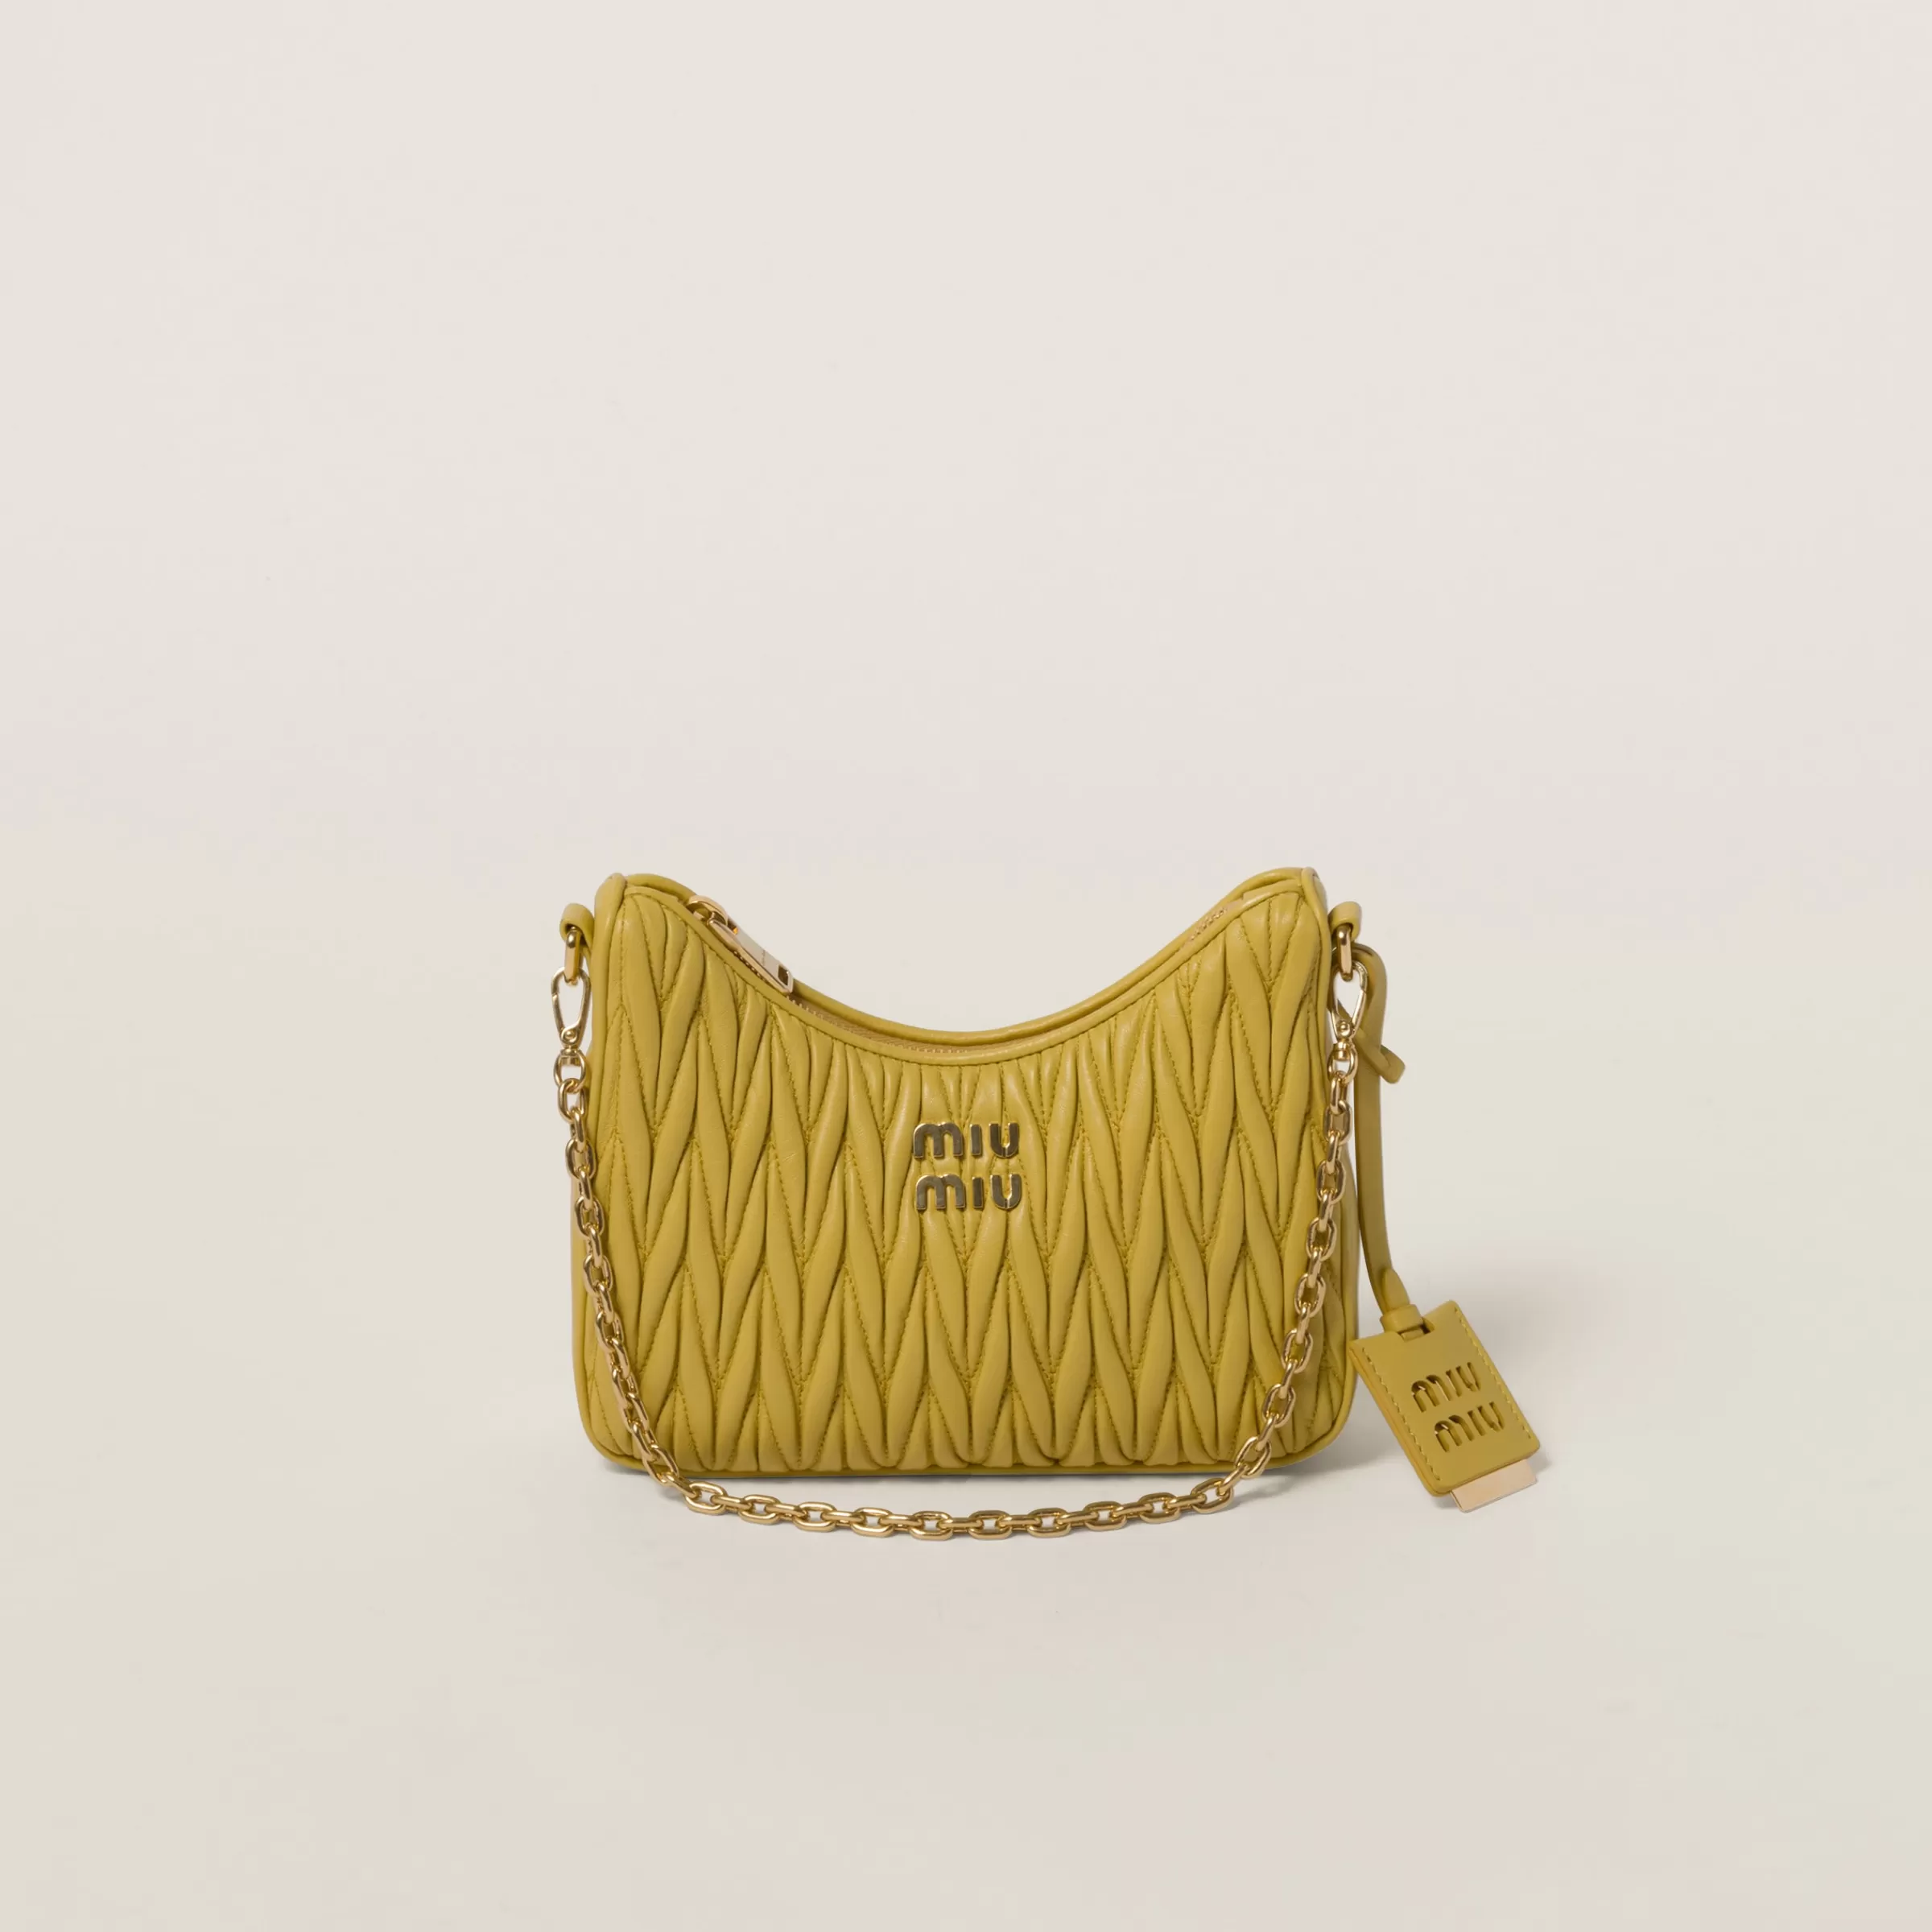 Miu Miu Pineapple Matelassé Nappa Leather Shoulder Bag |